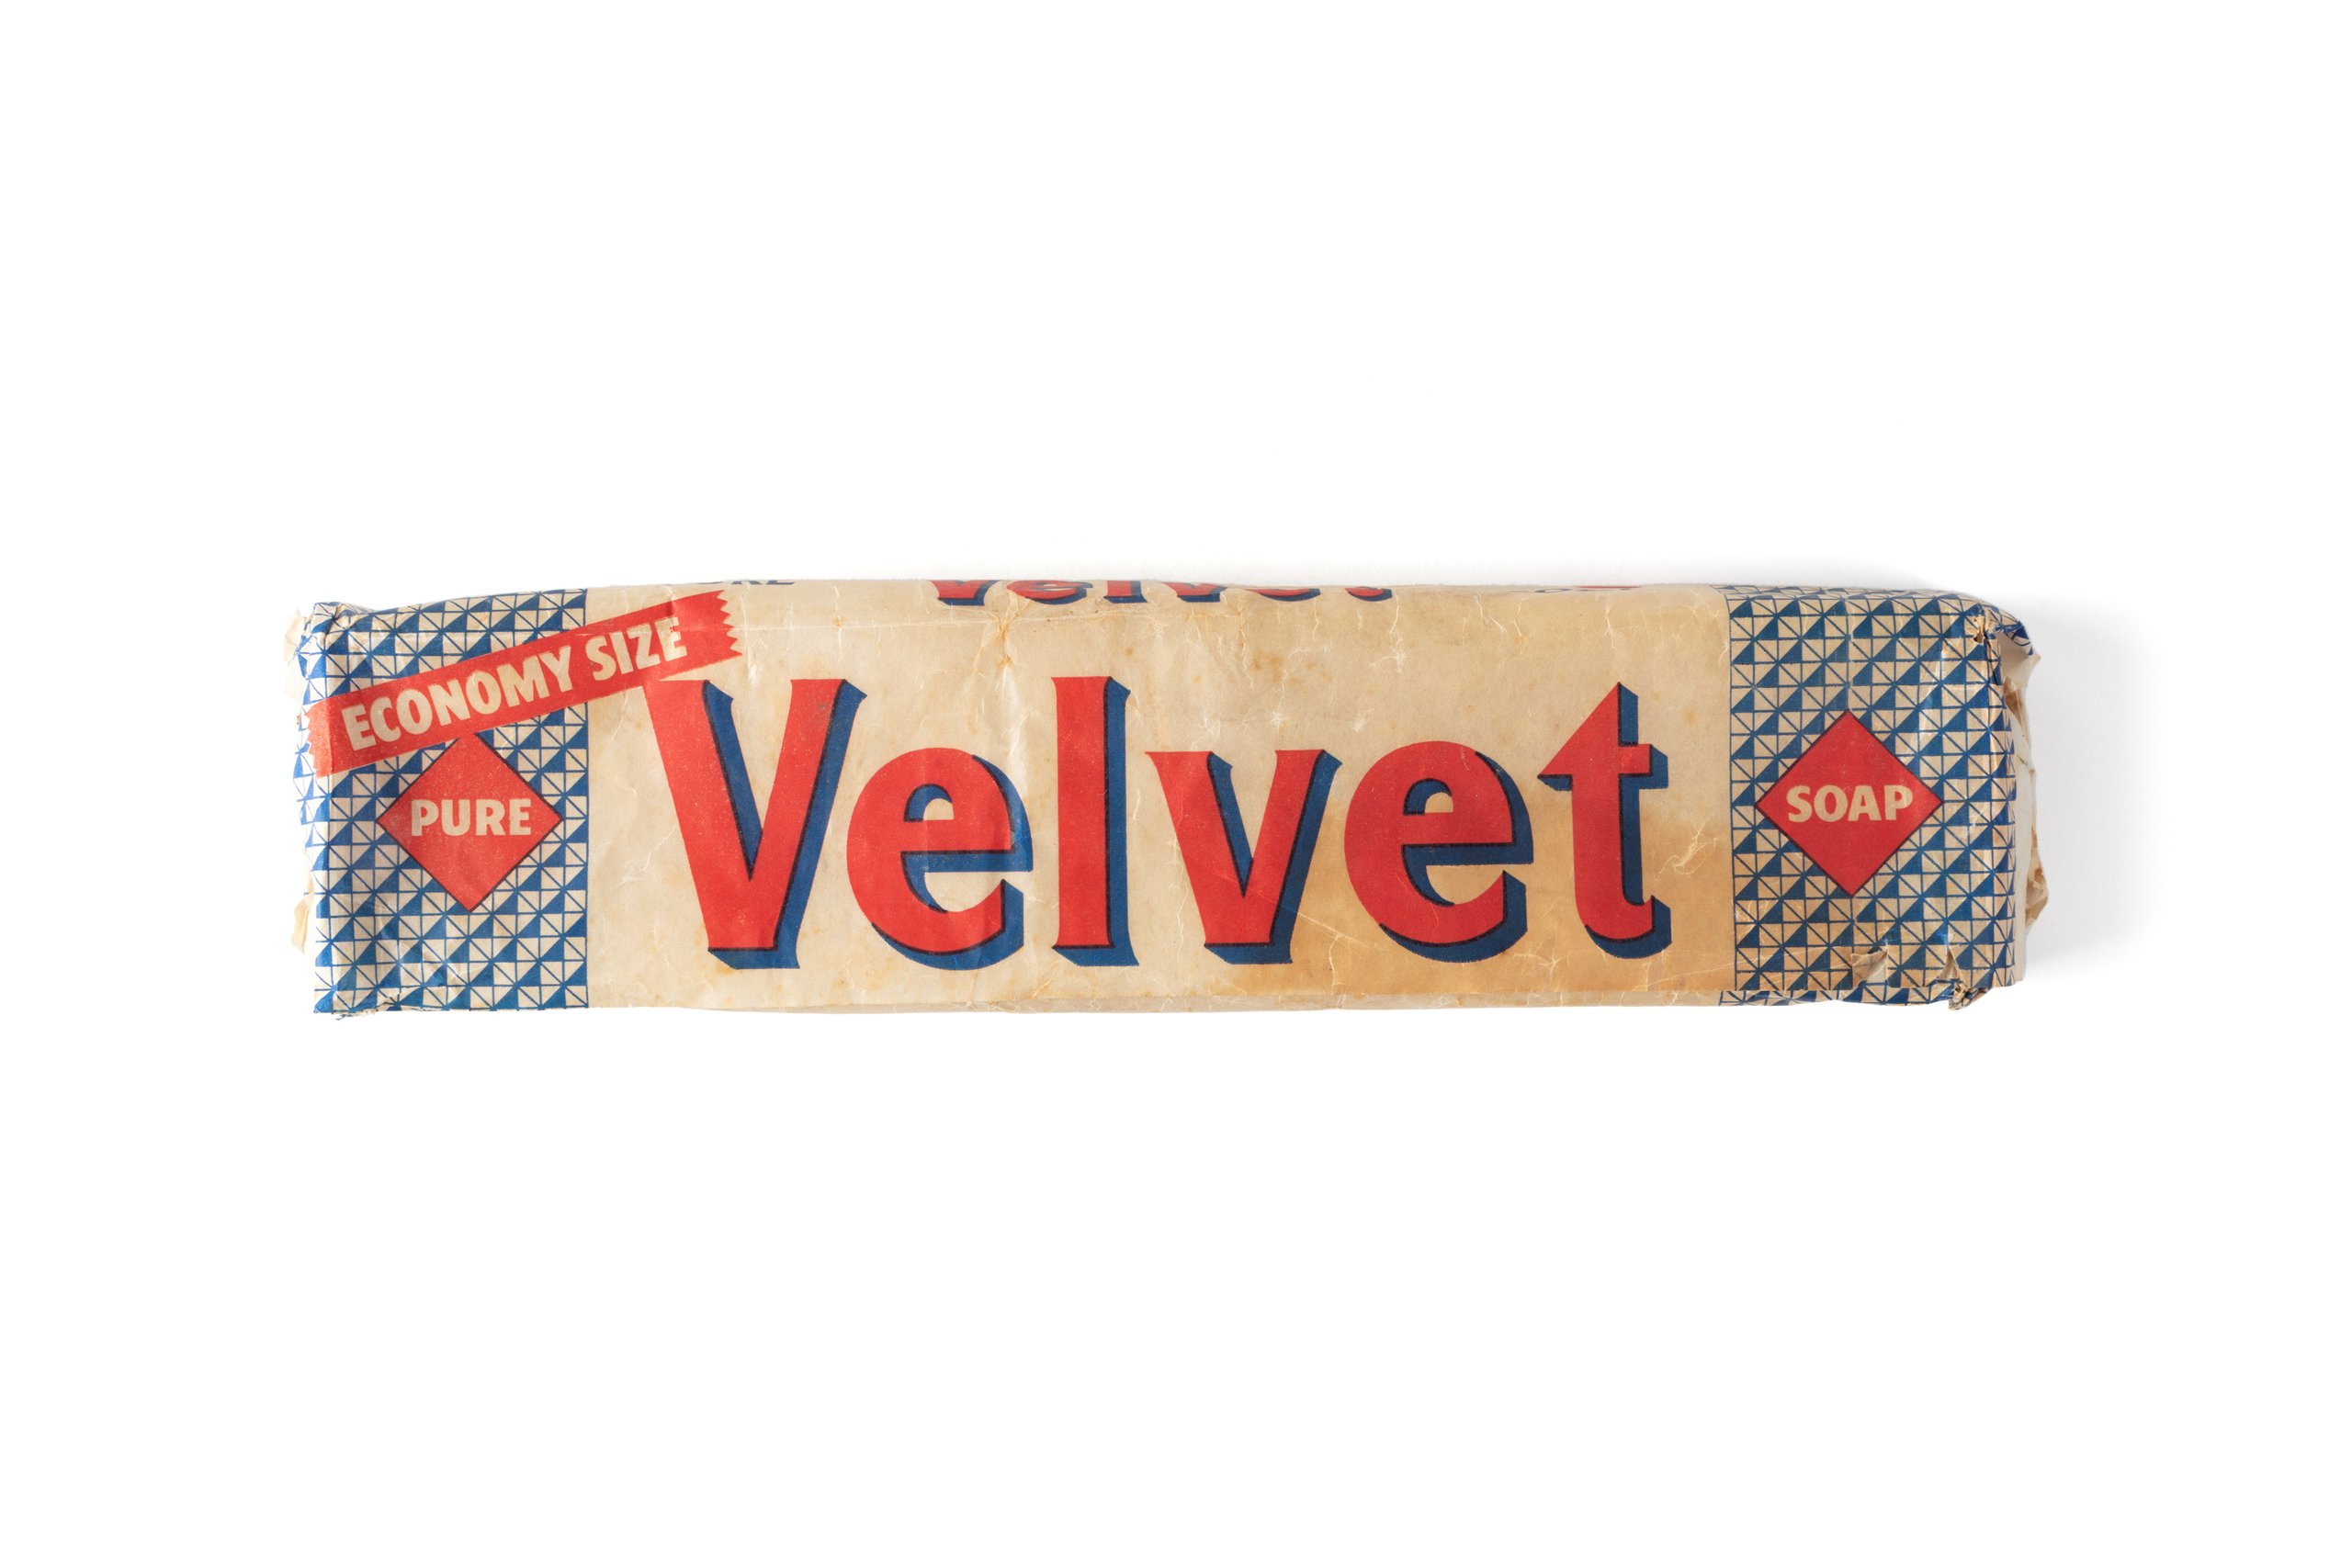 'Velvet' soap made by J Kitchen & Sons